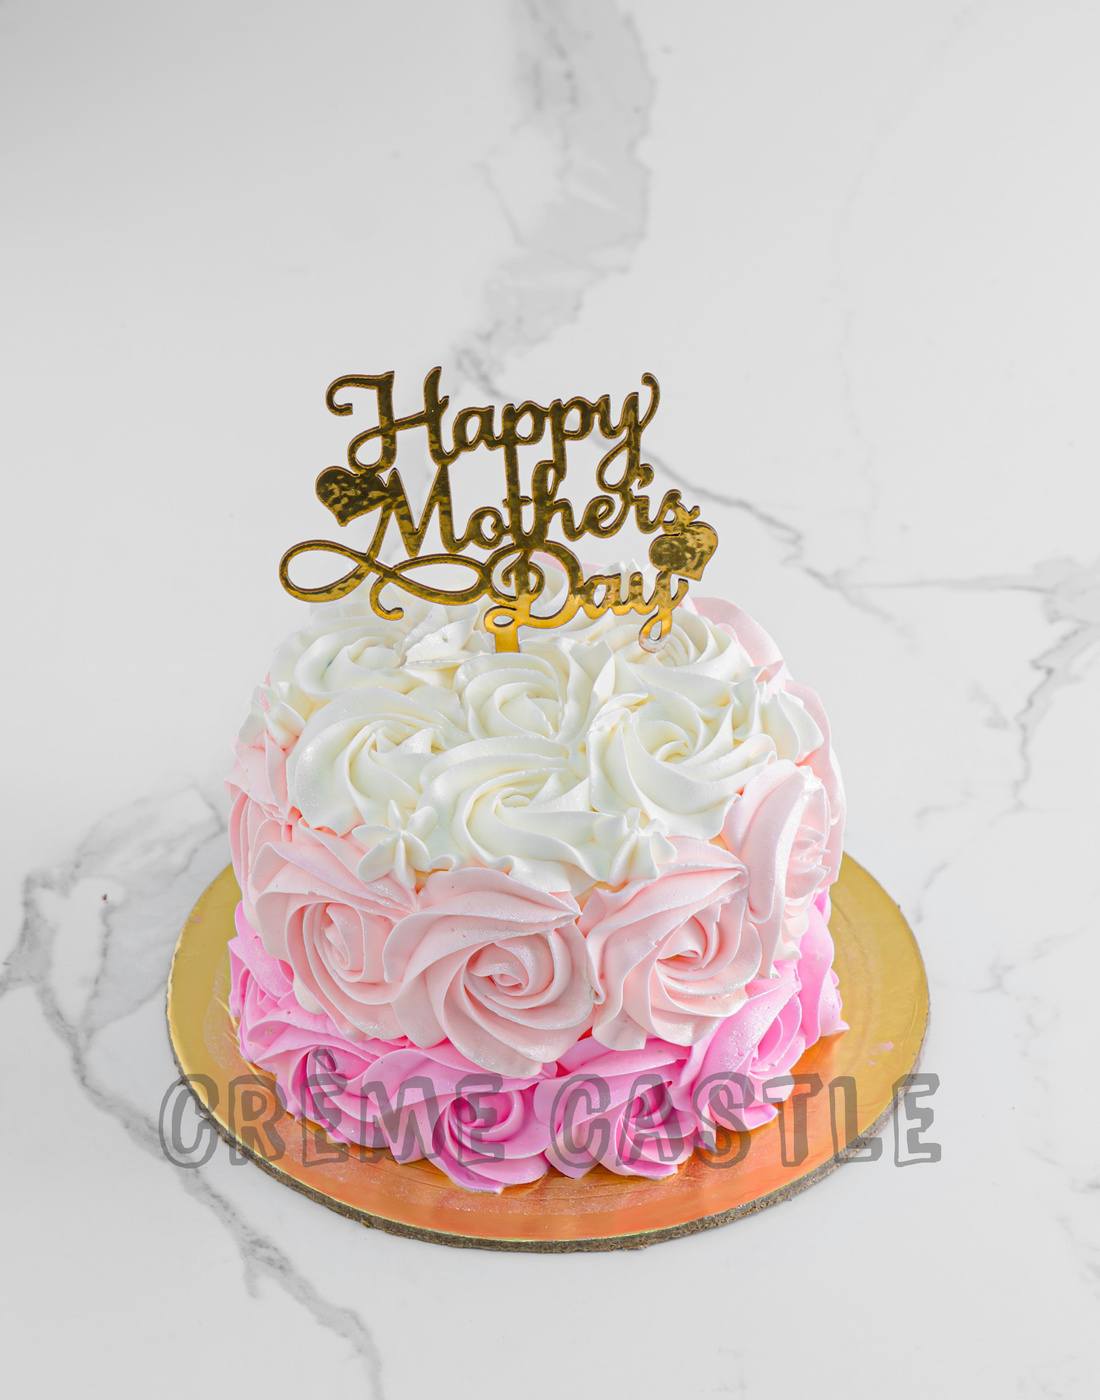 Rose Bunch Mom Cake - Creme Castle